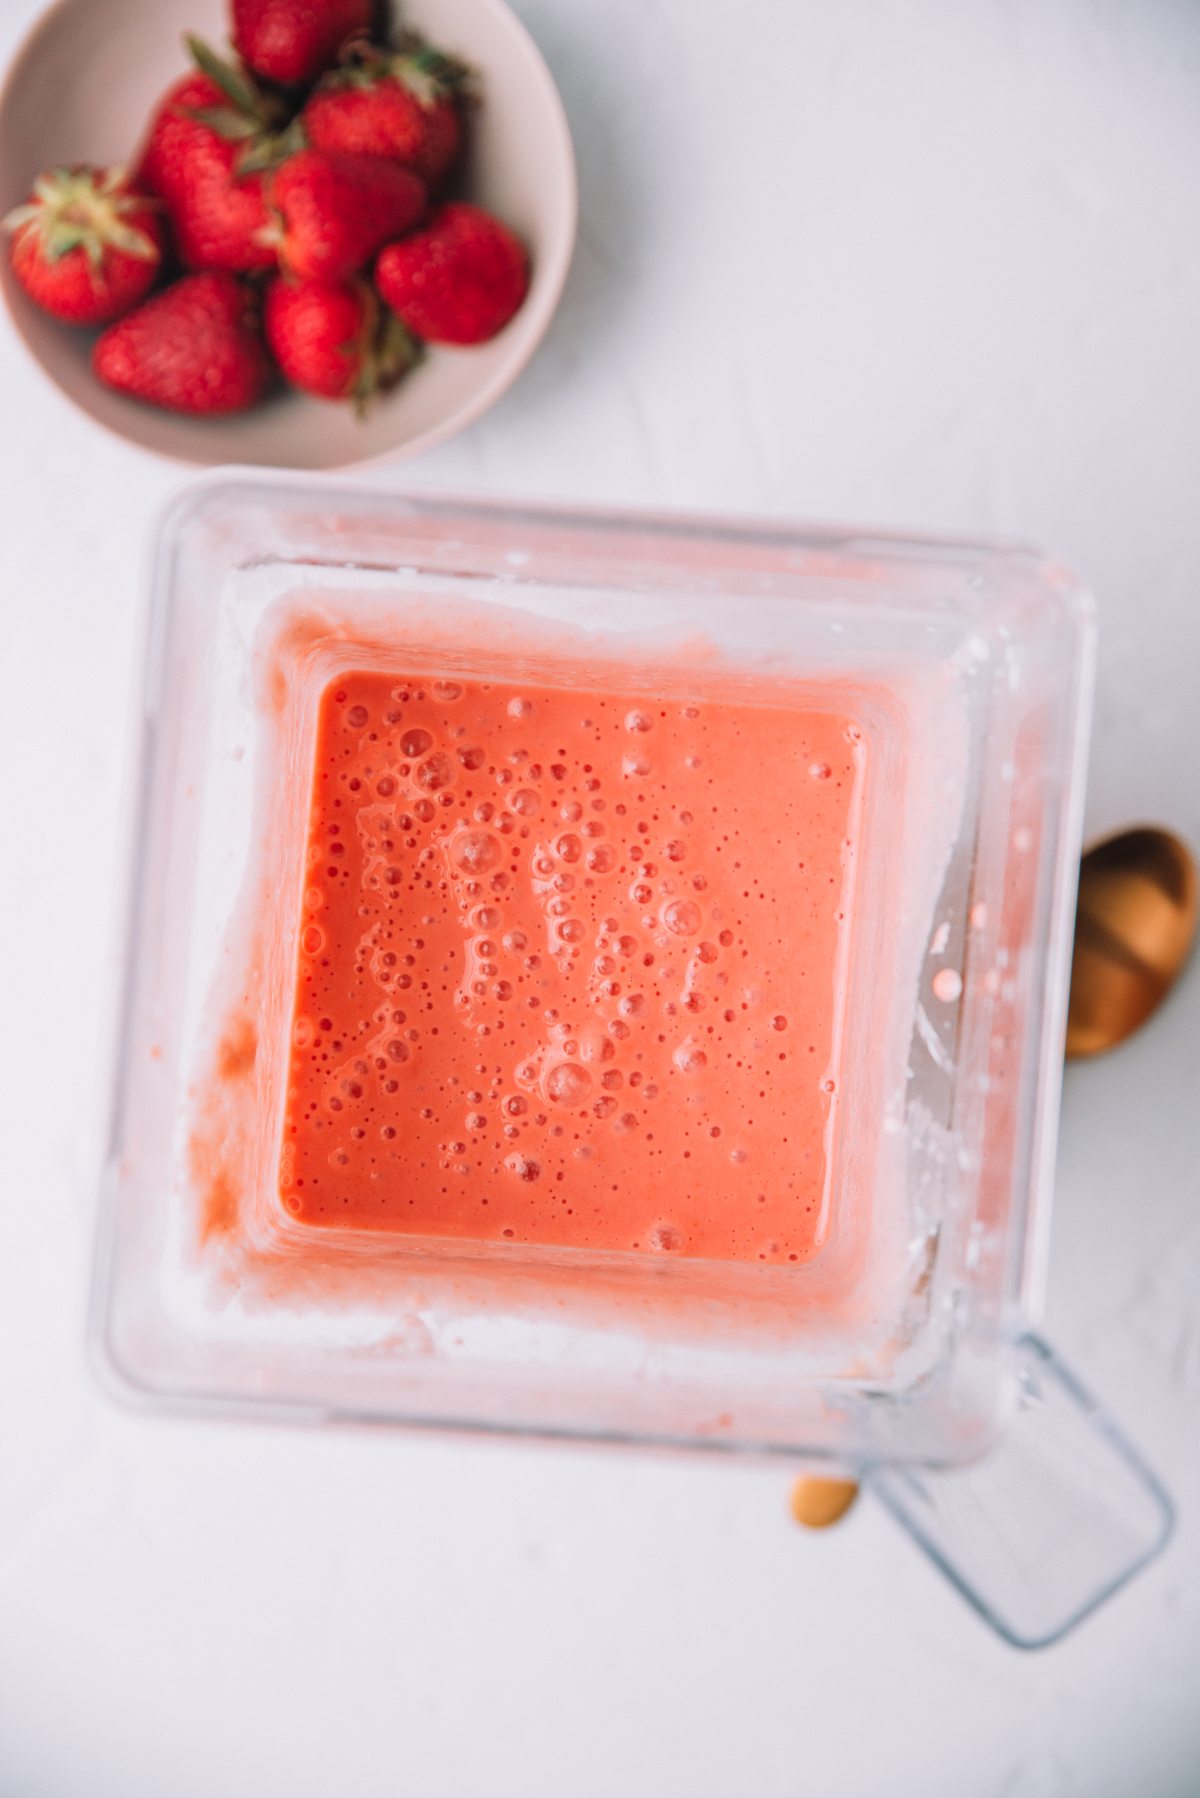 Blender full of Strawberry Mango Smoothie